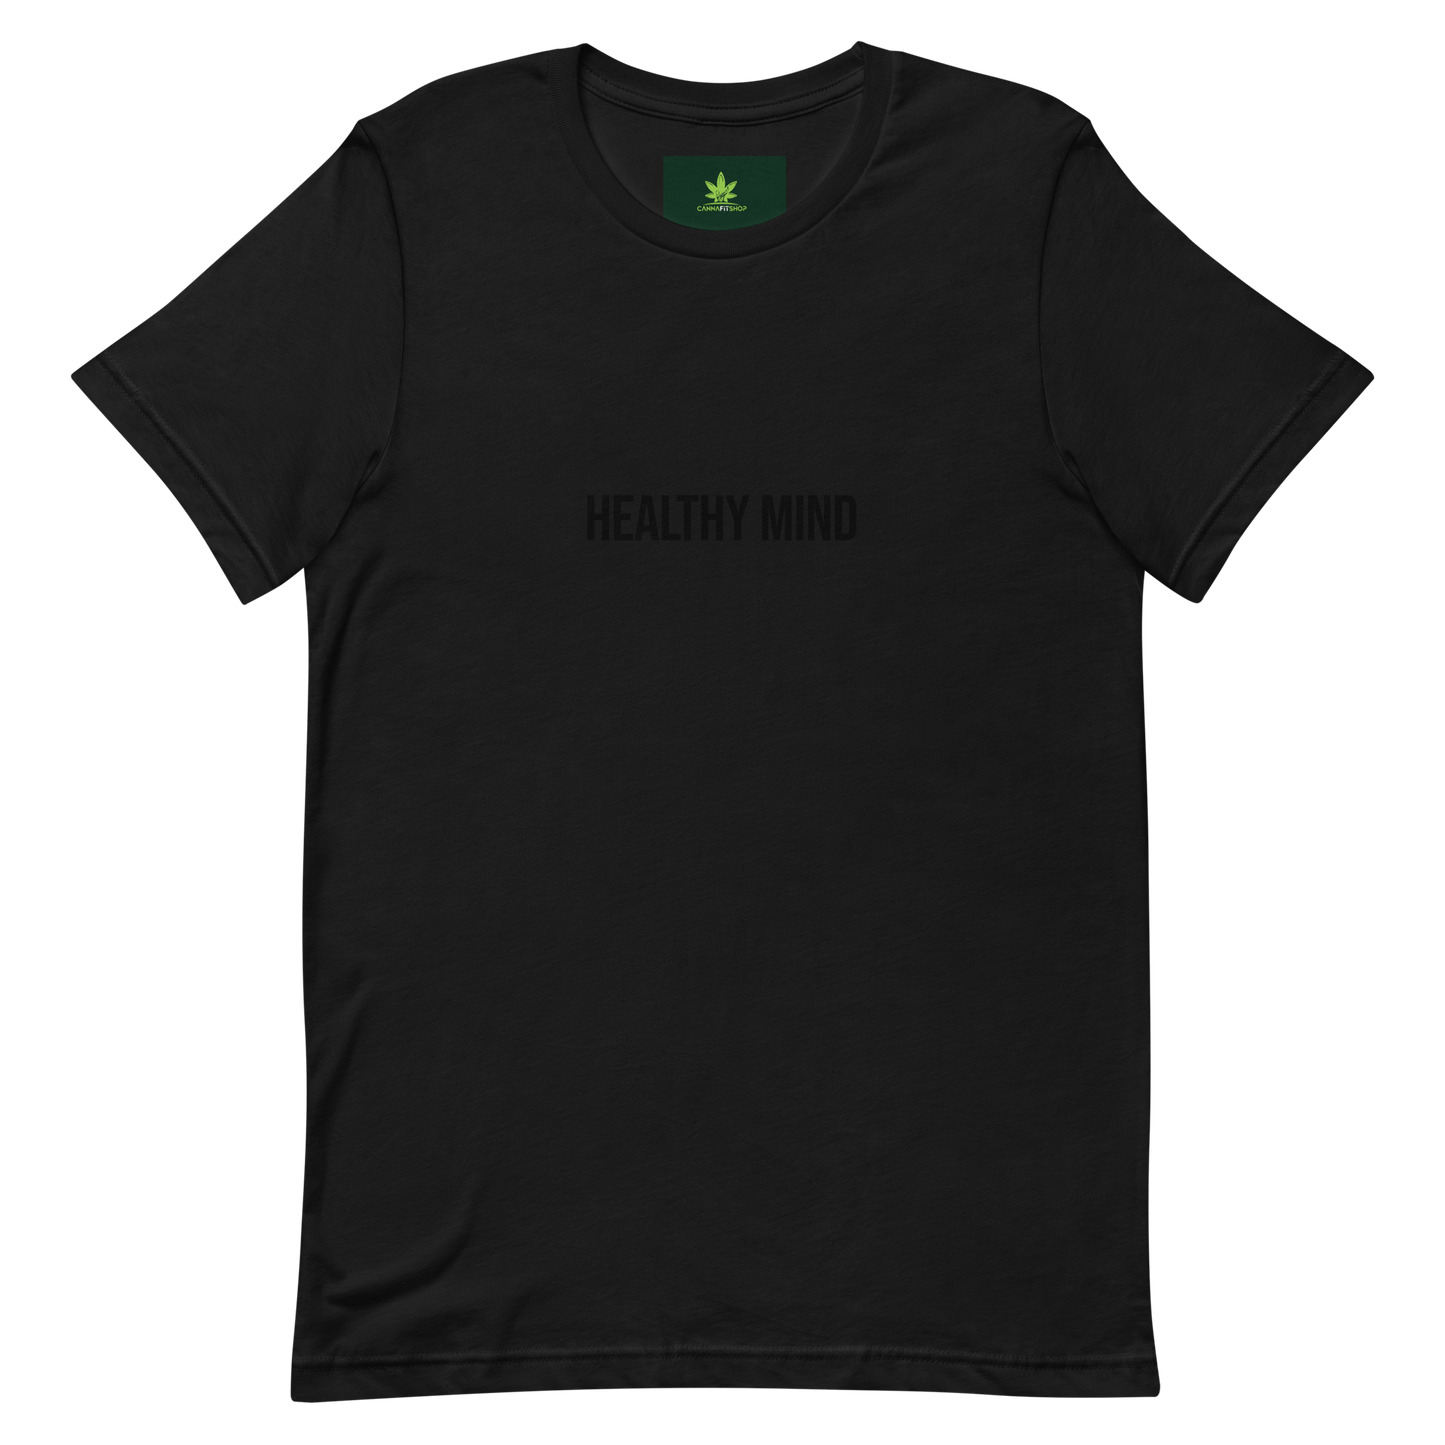 Healthy Minds Unisex T-Shirt